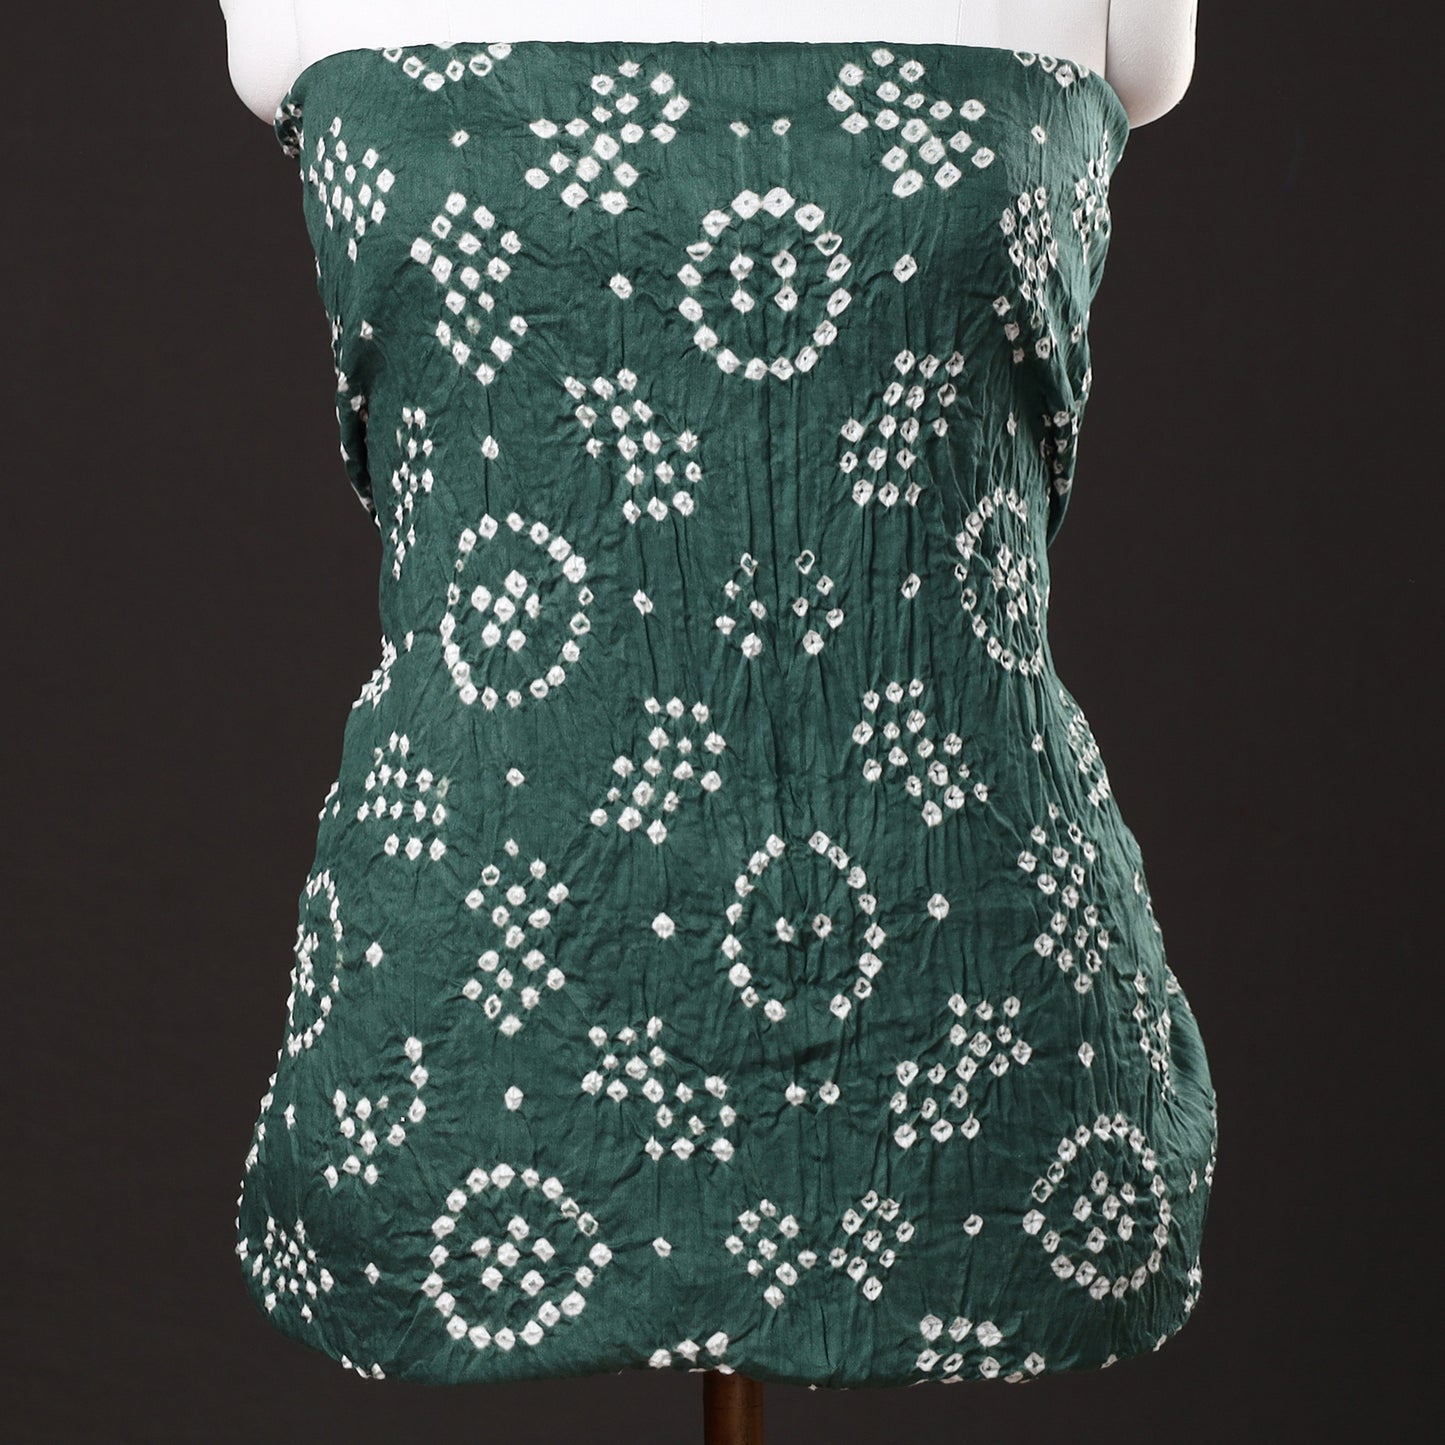 Green - 3pc Kutch Bandhani Tie-Dye Satin Cotton Suit Material Set 85